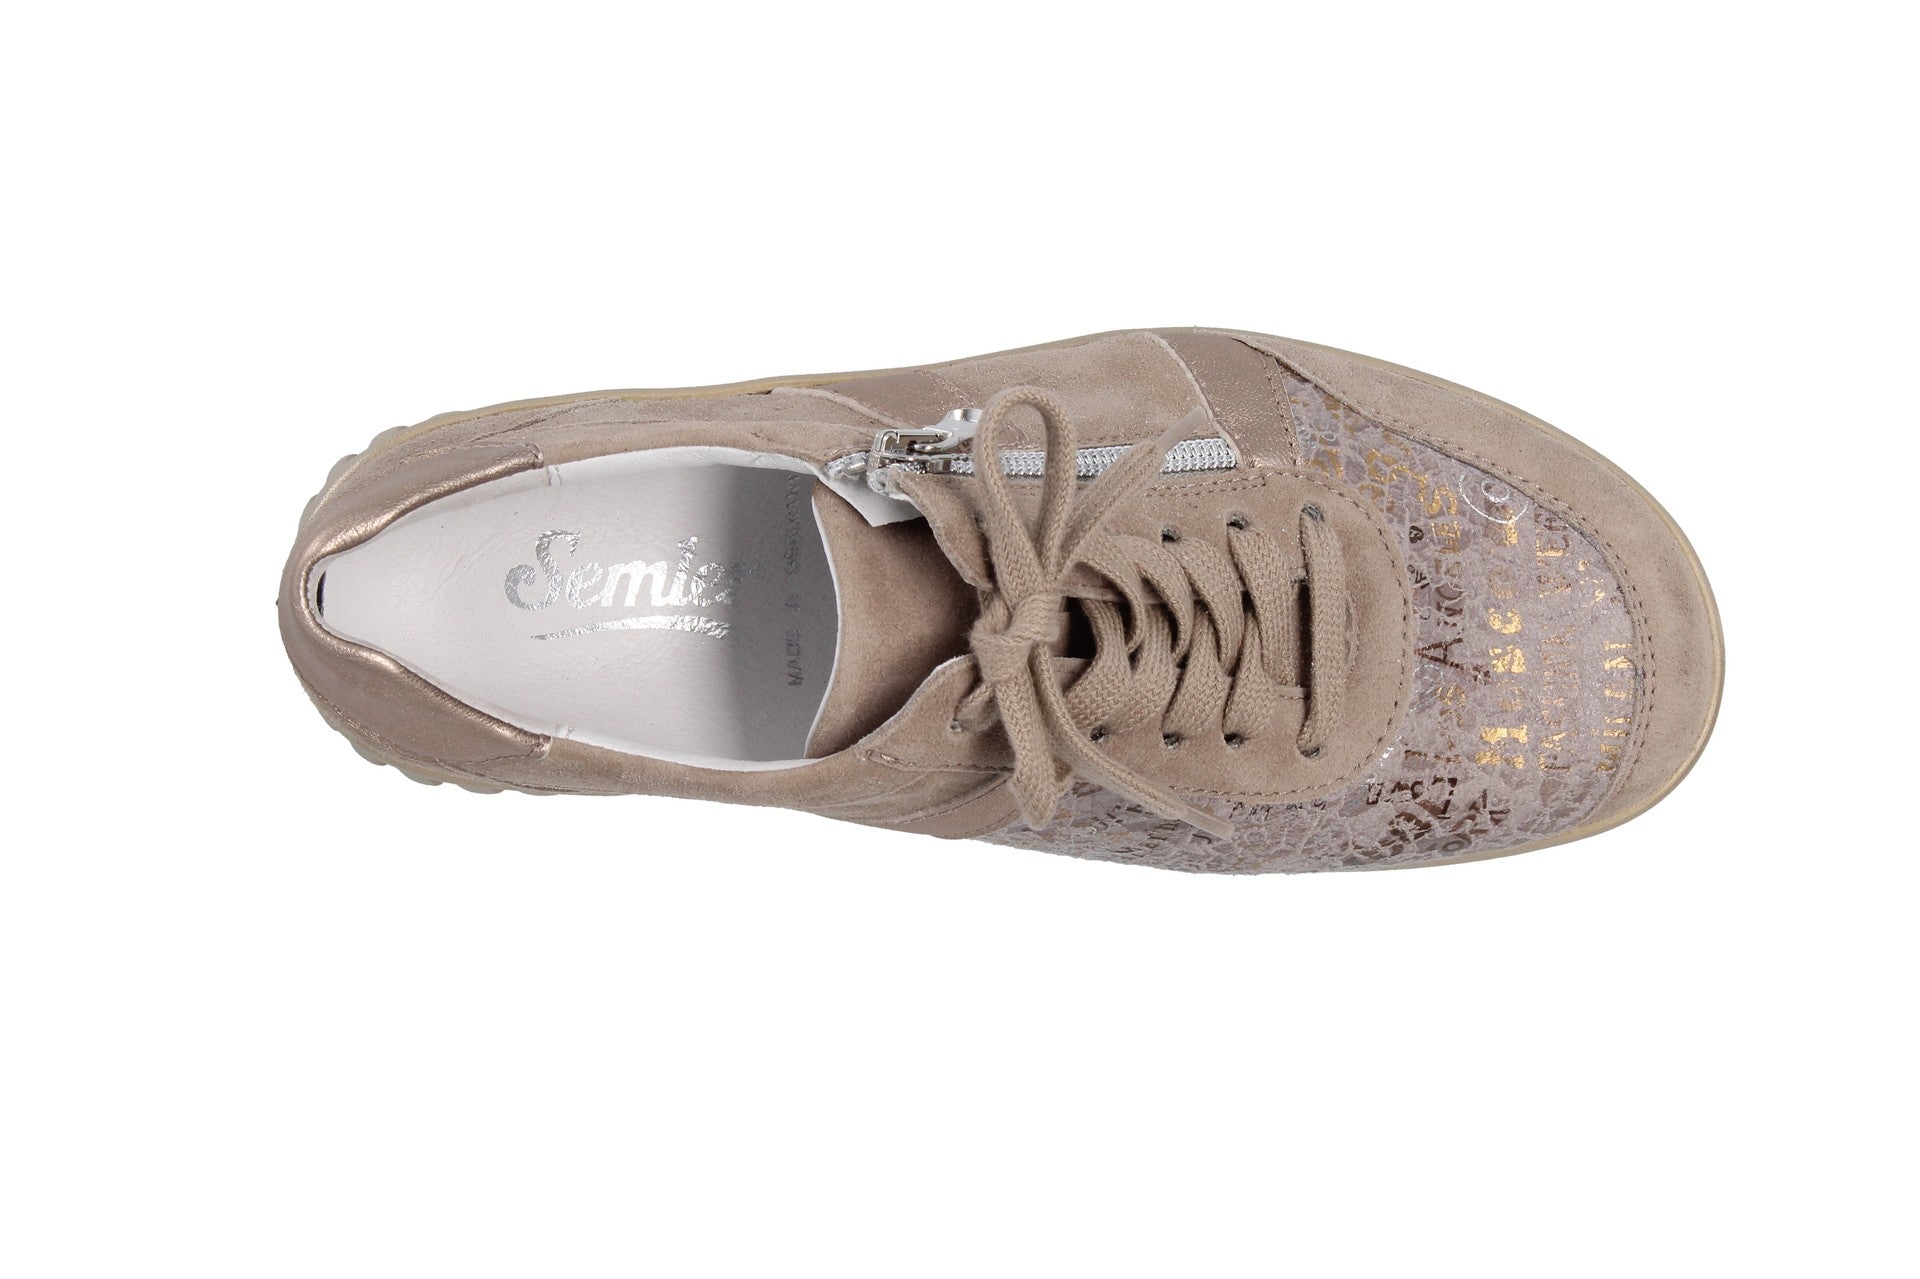 Lena – panna/dune – lace-up shoe